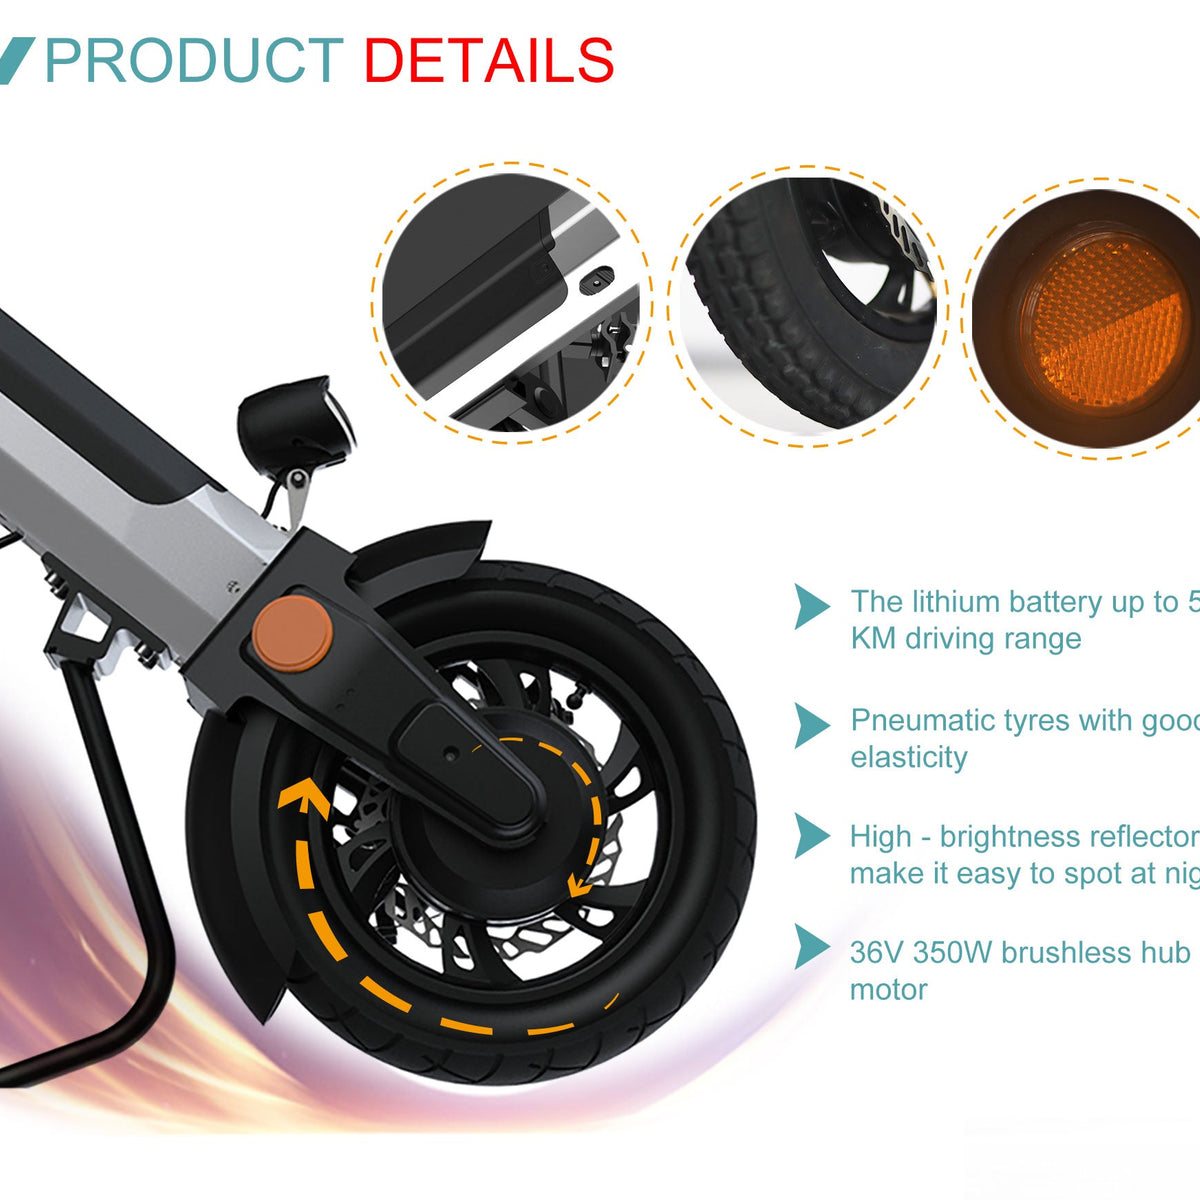 Catamié de handbike eléctrico para sillas de ruedas manuales